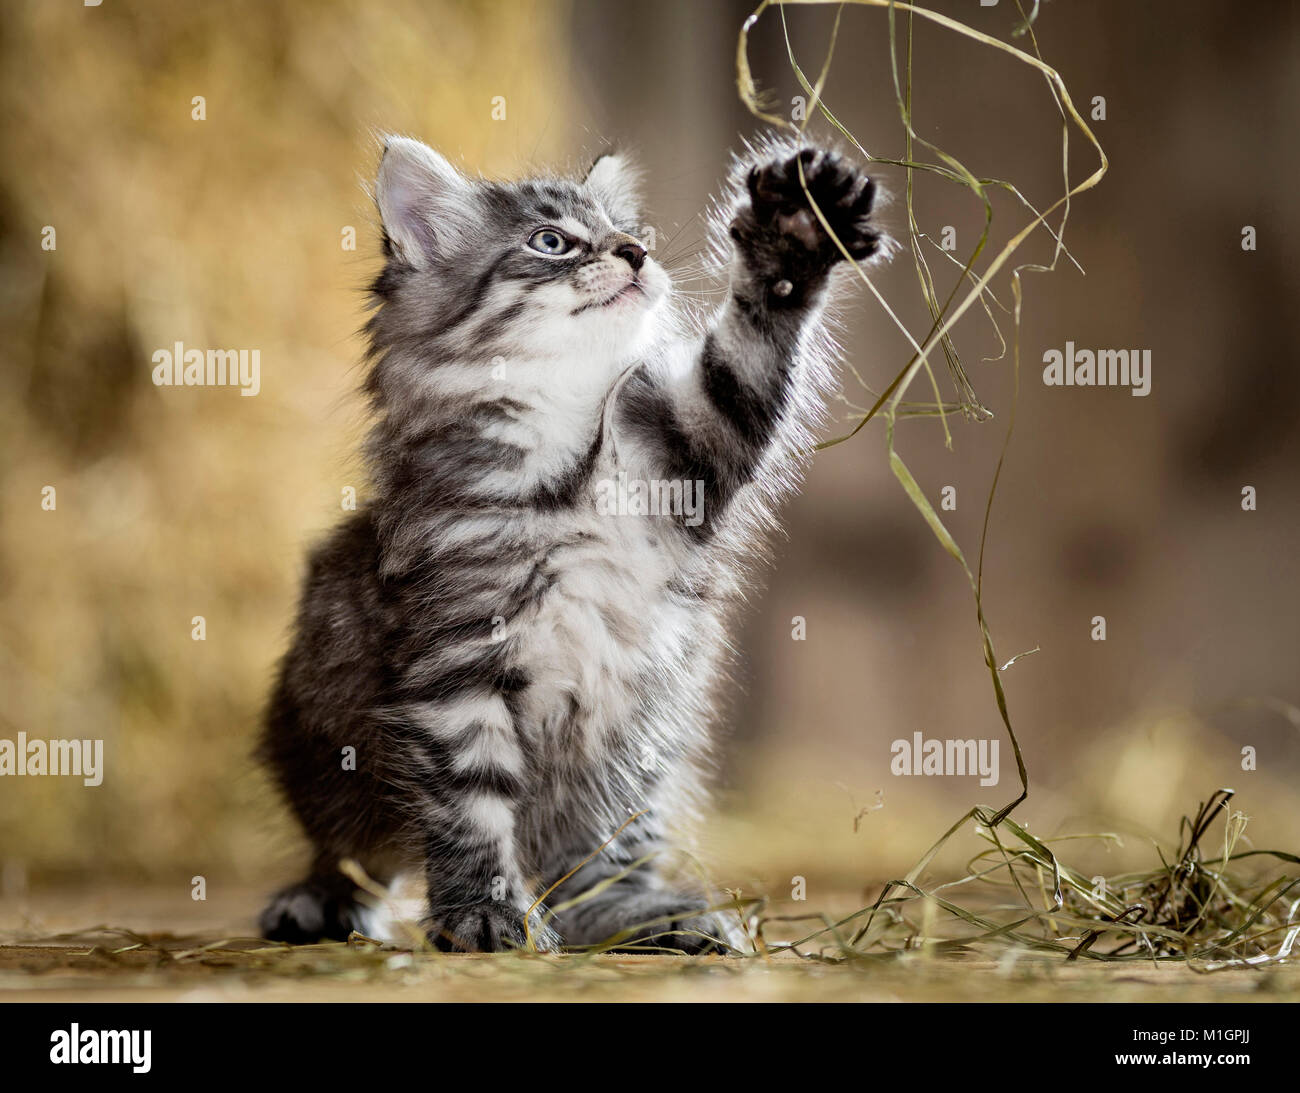 https://c8.alamy.com/comp/M1GPJJ/norwegian-forest-cat-kitten-in-a-barn-playing-with-straw-germany-M1GPJJ.jpg